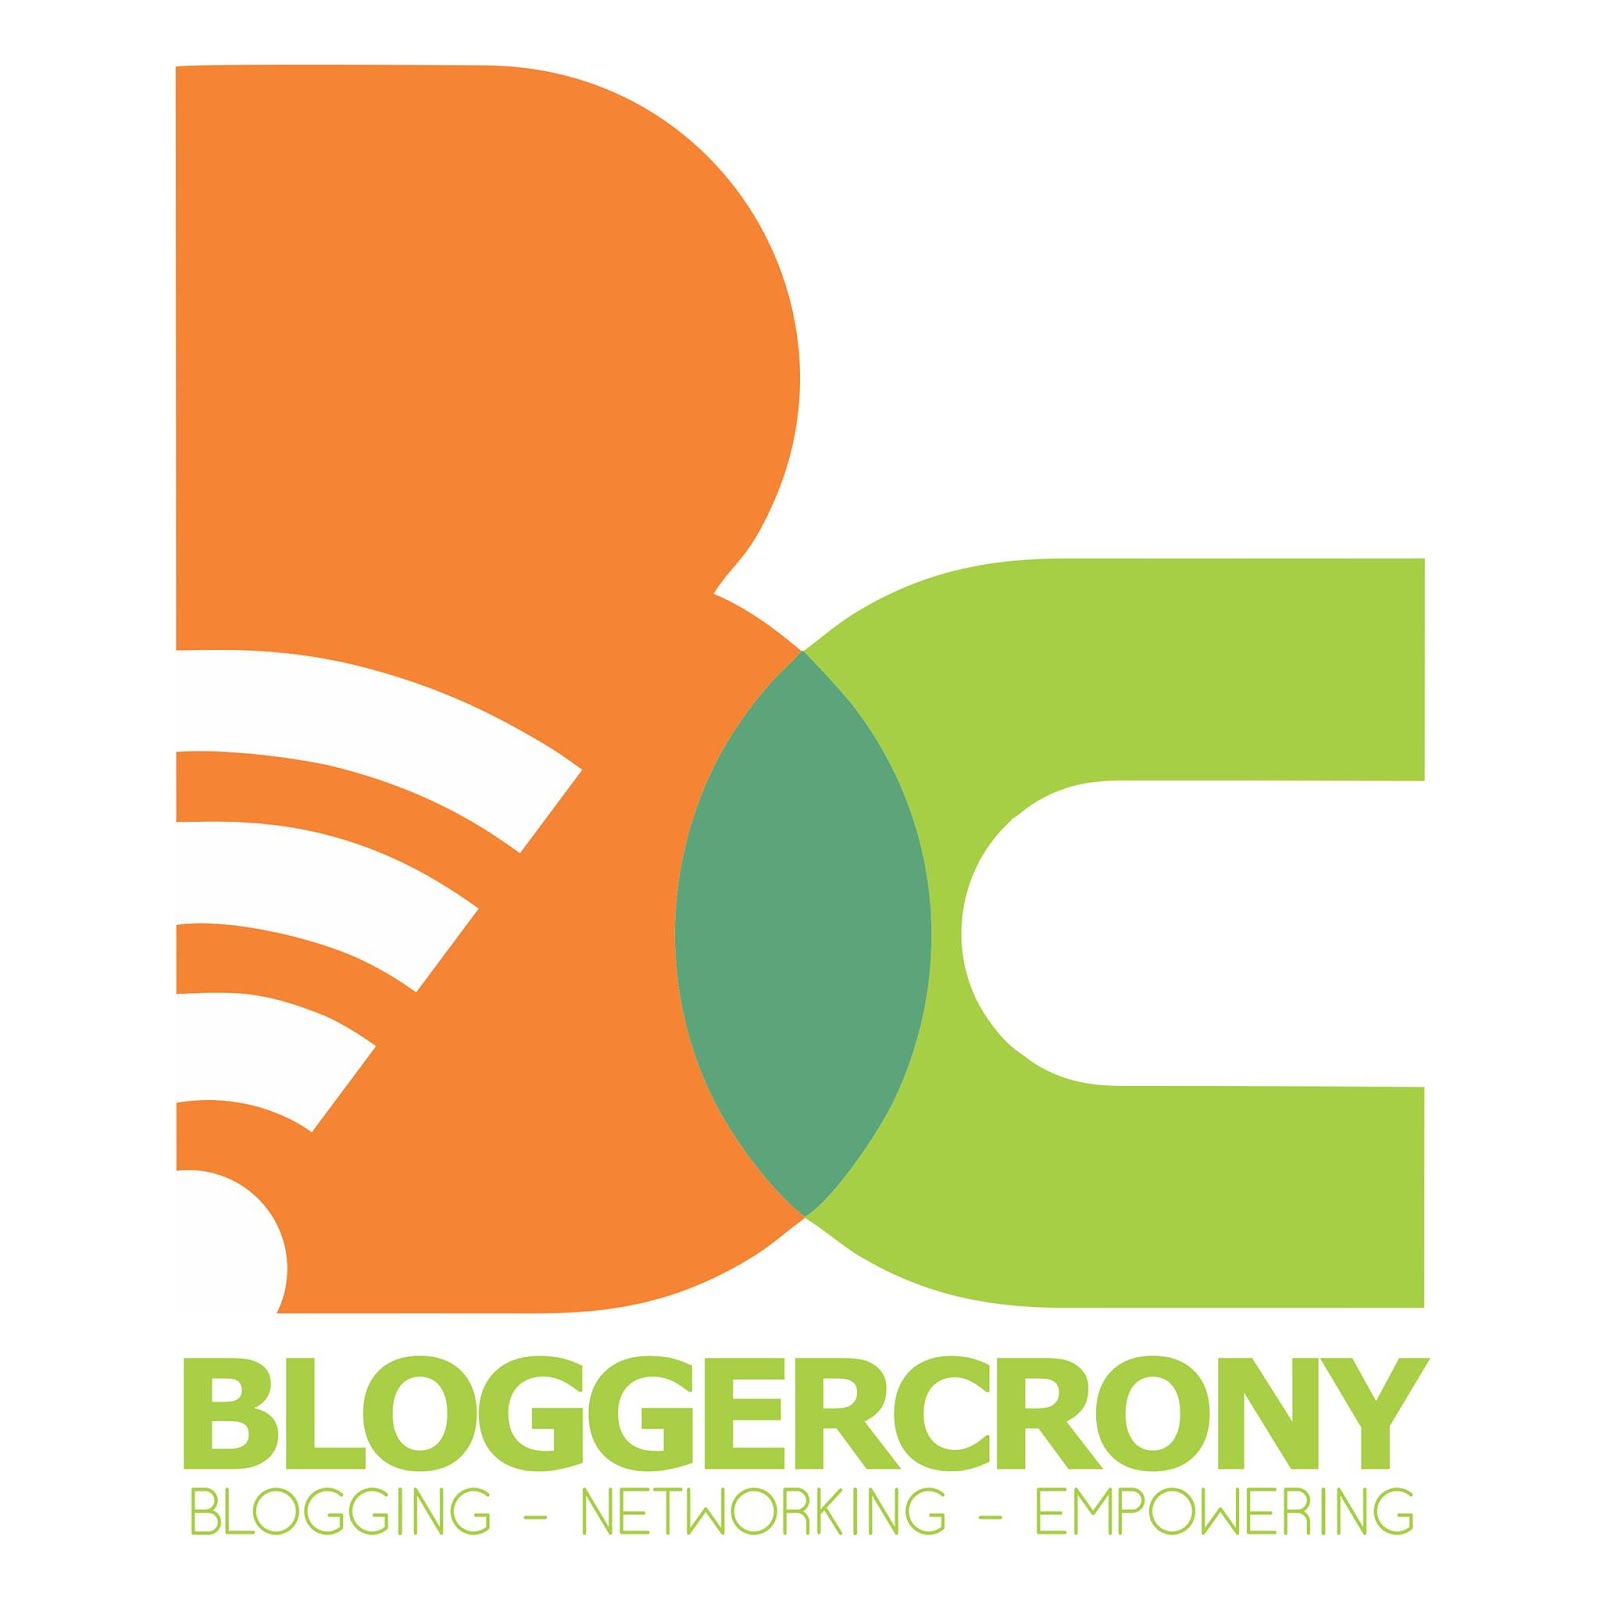 Member of BloggerCrony